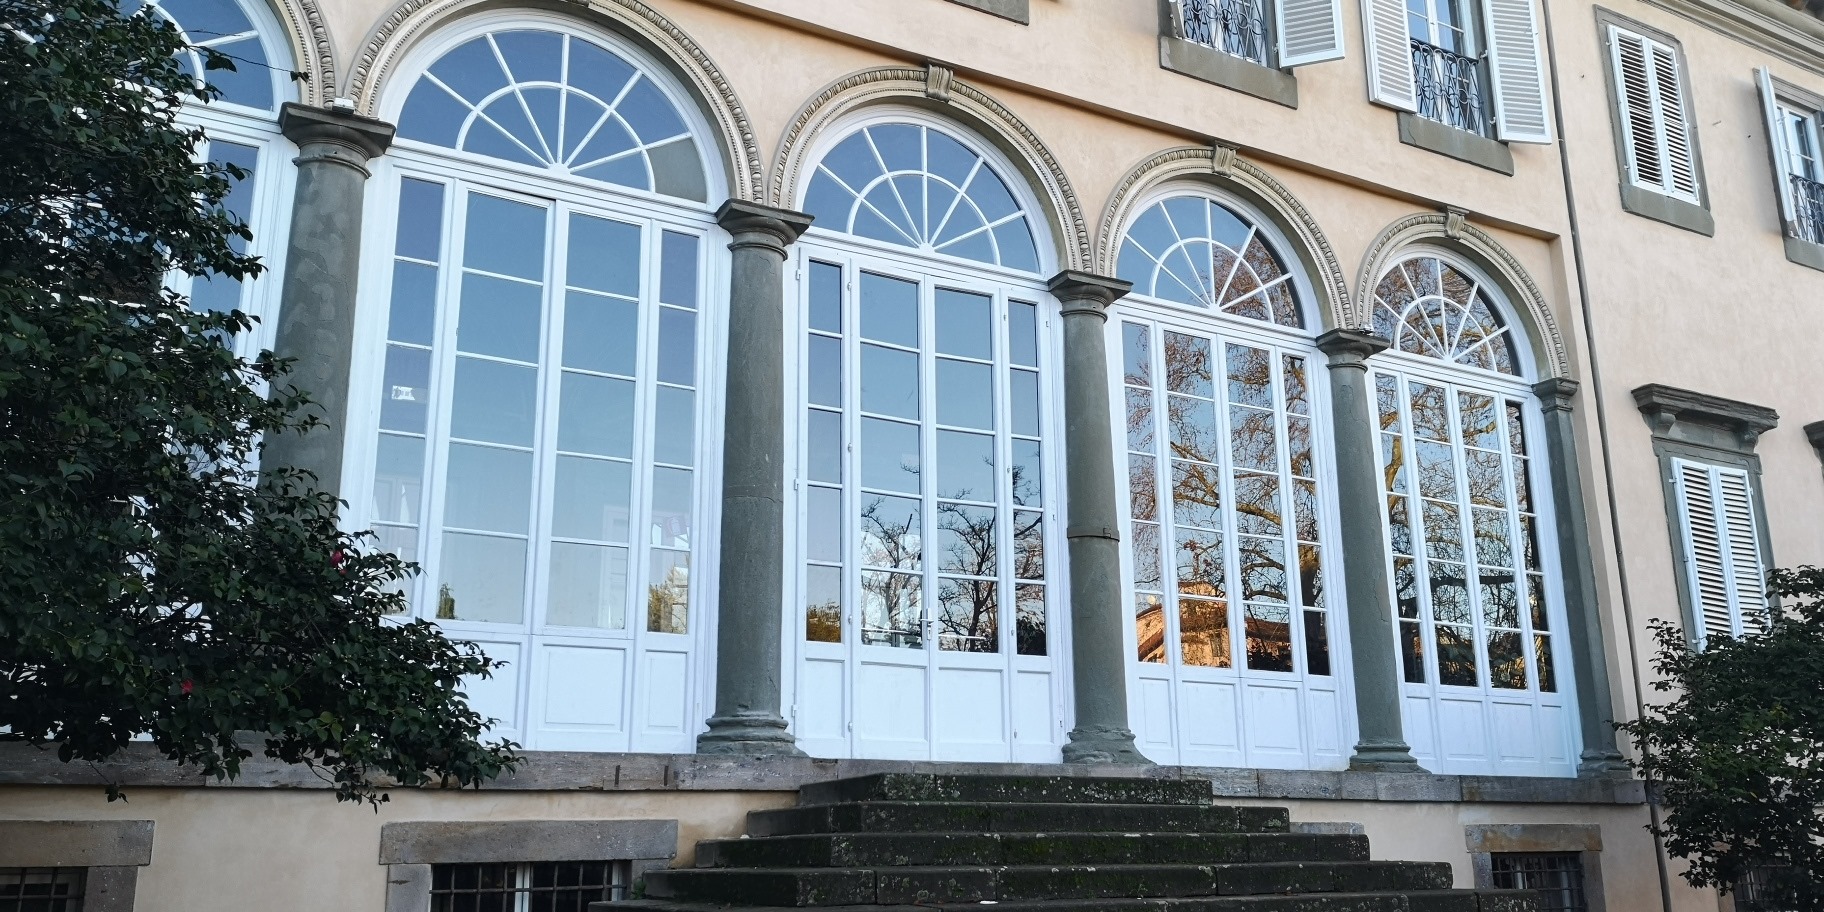 Stained glass windows at villa Bottini